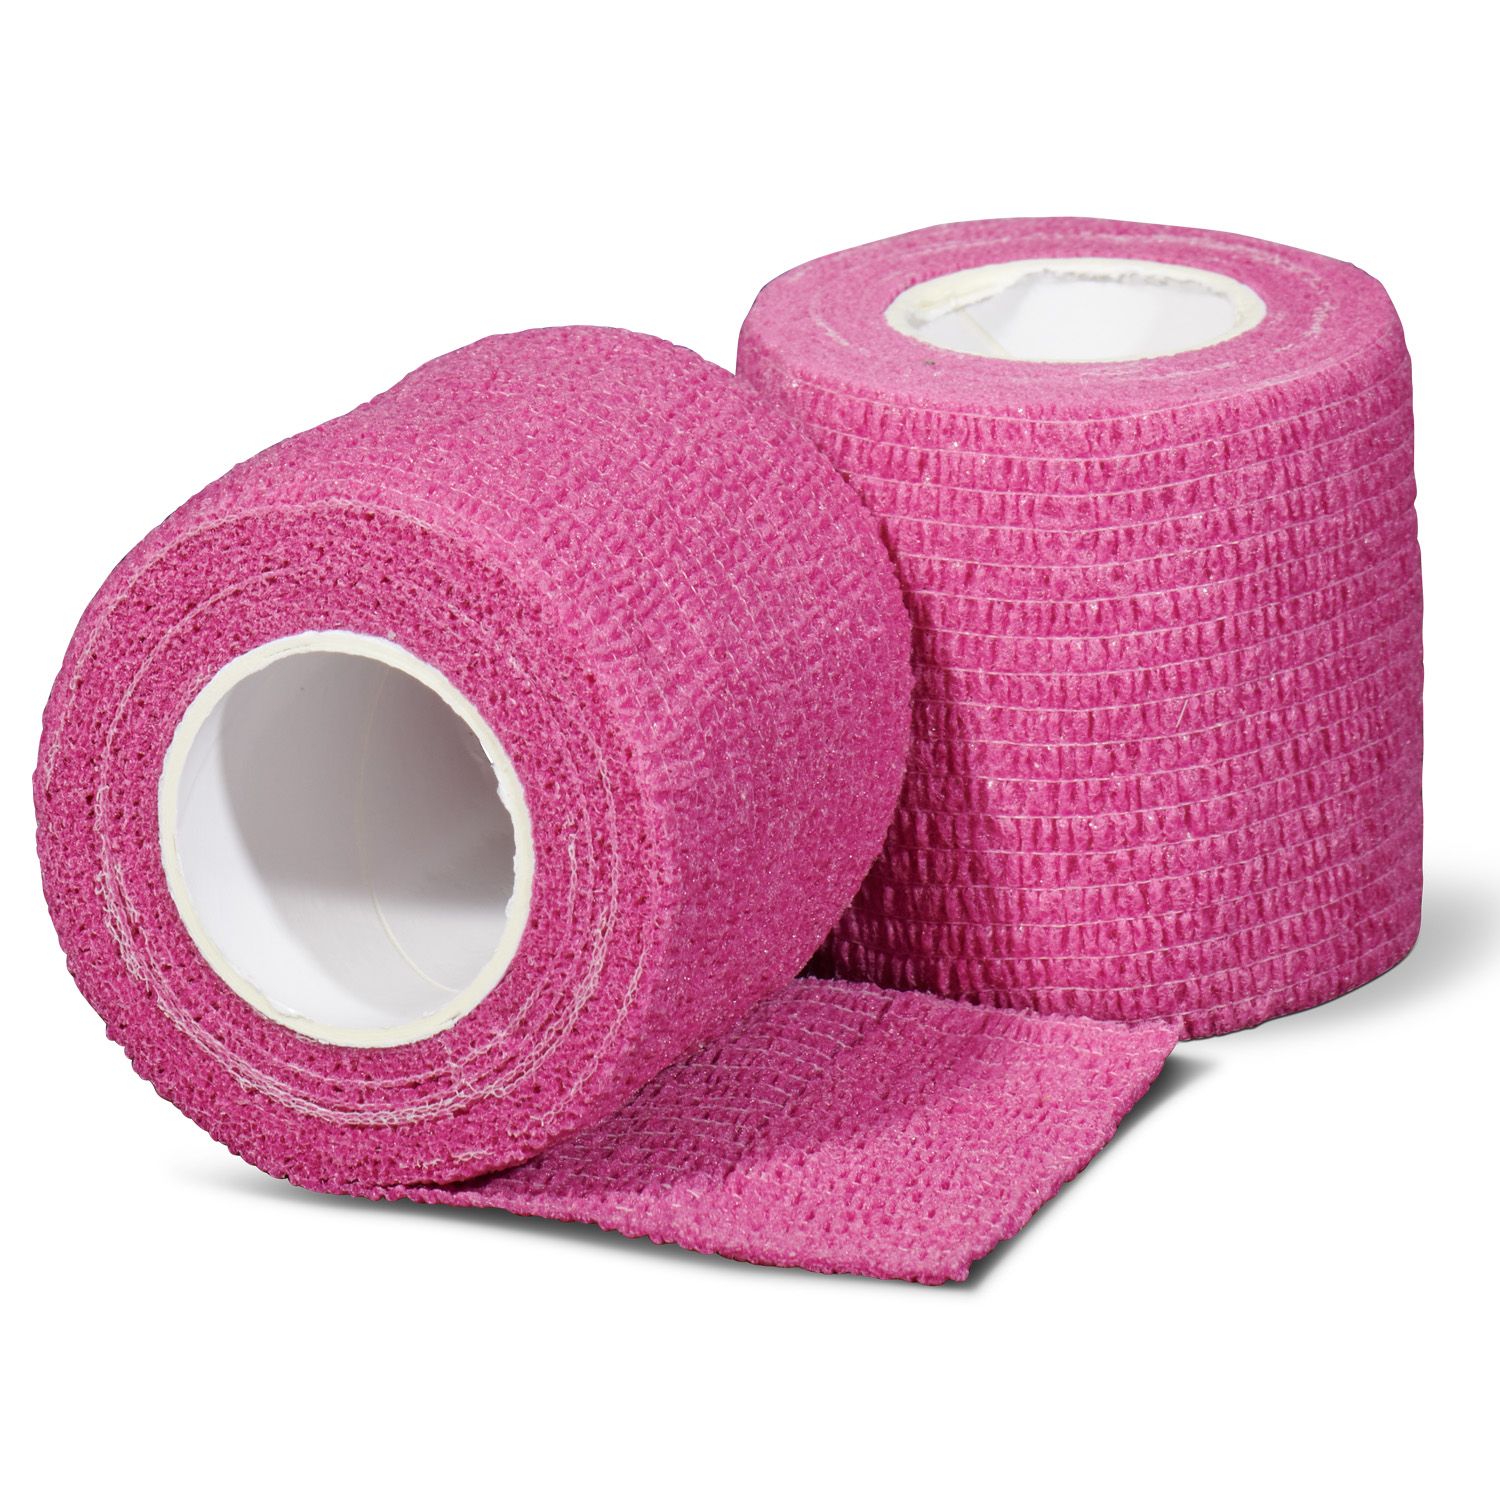 gladiator sports underwrap bandage per 8 rolls pink